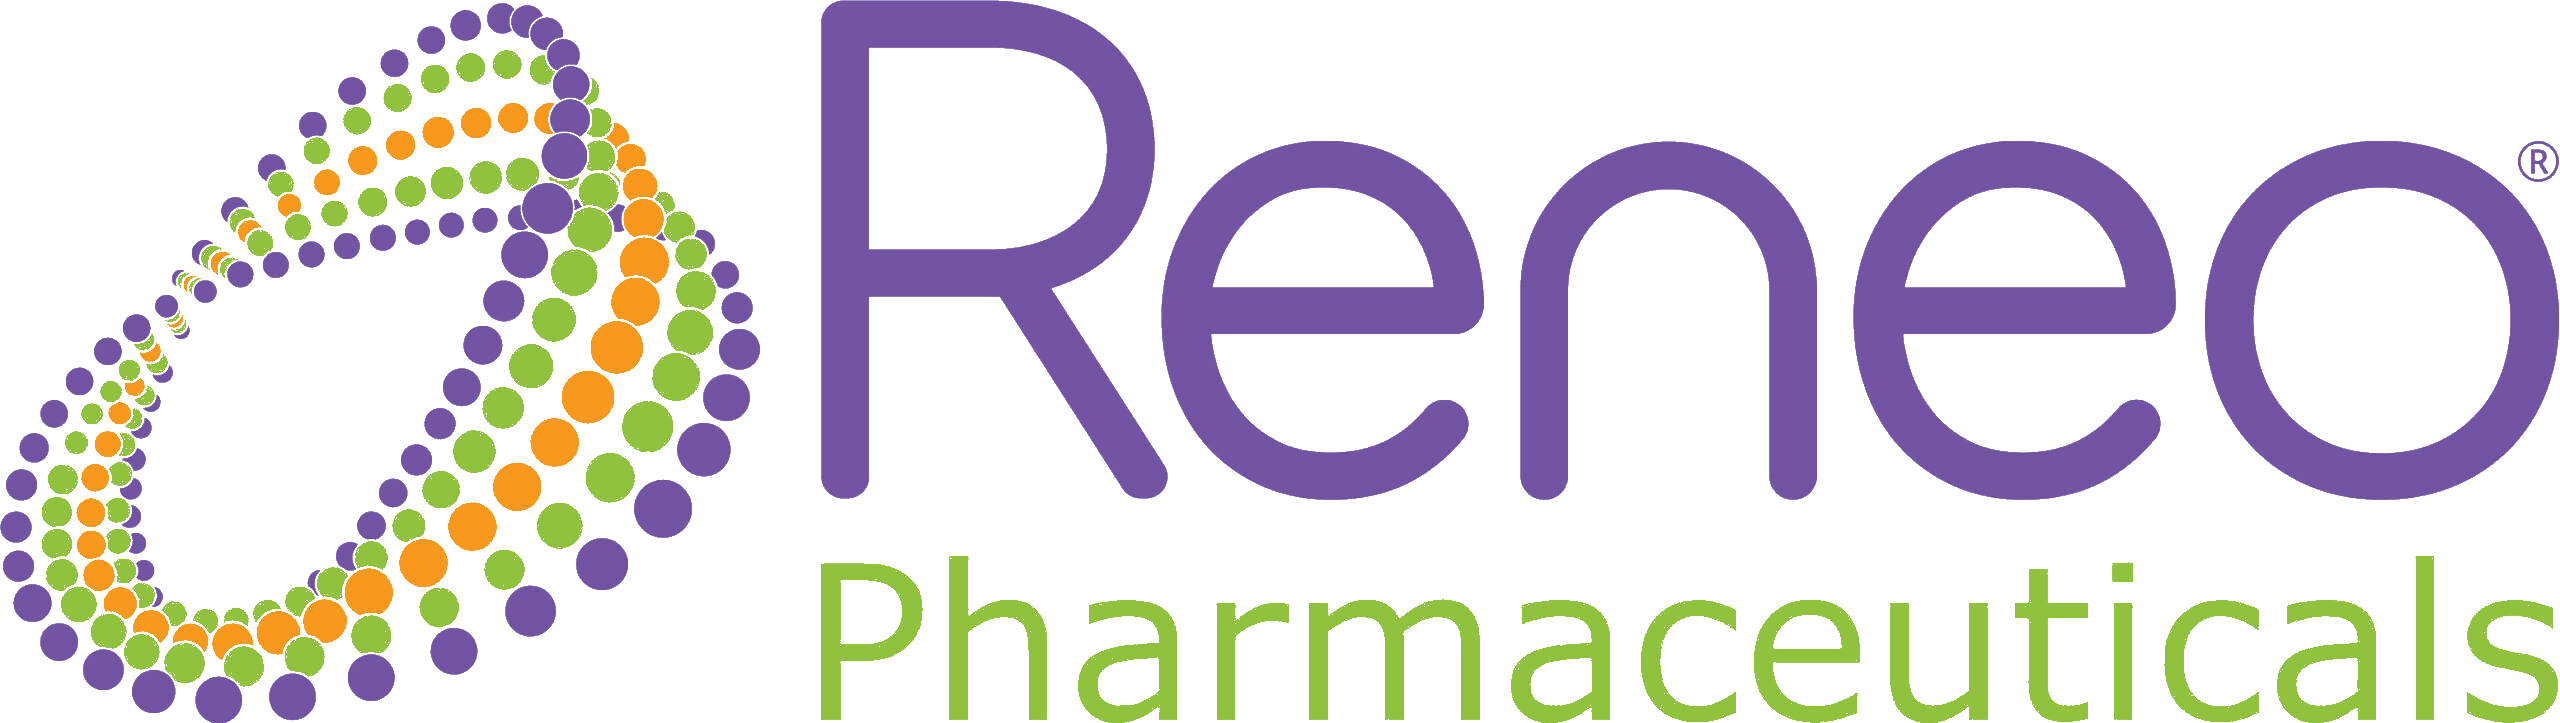 Reneo Pharmaceuticals, Inc. logo